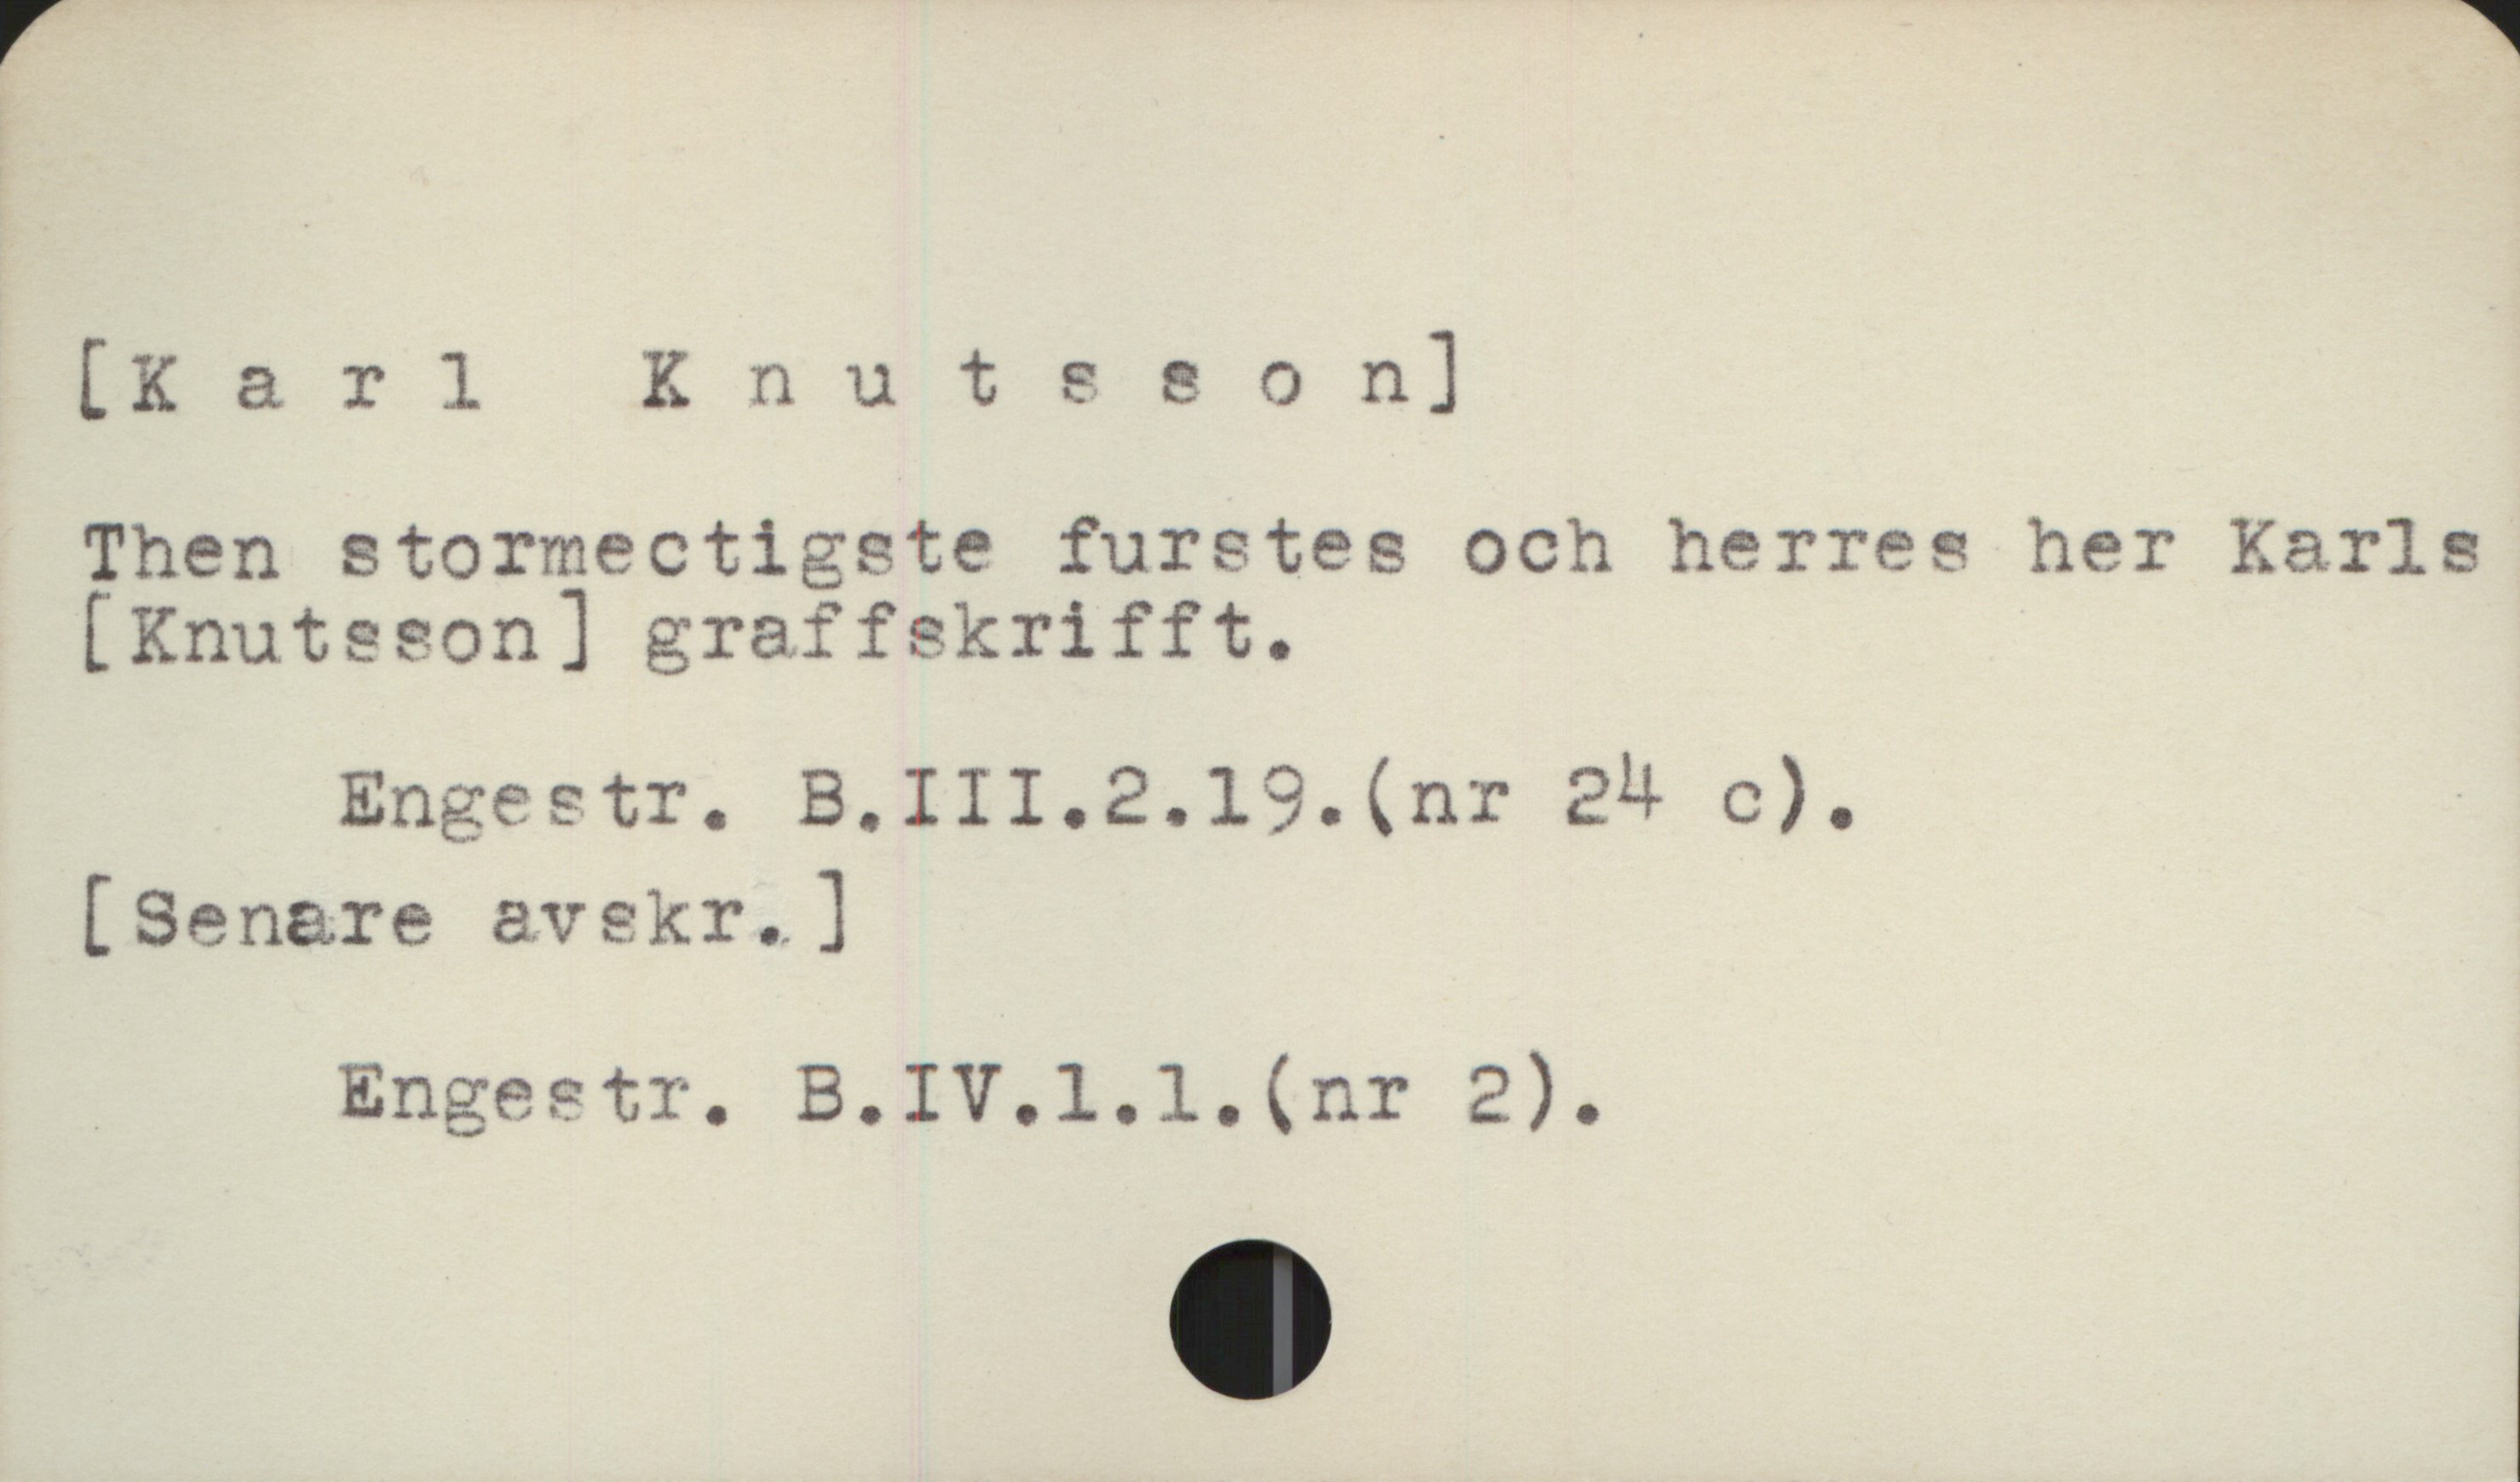  [Karl Enuts & o n]
Then stormectigste furstes och herres her Karls
(KEnuteeon] graffskrifft.

Engestr. 24 c), -
[Senare avekr. ]
. Engeetr. B.IV.1l.l. (nr 2).

